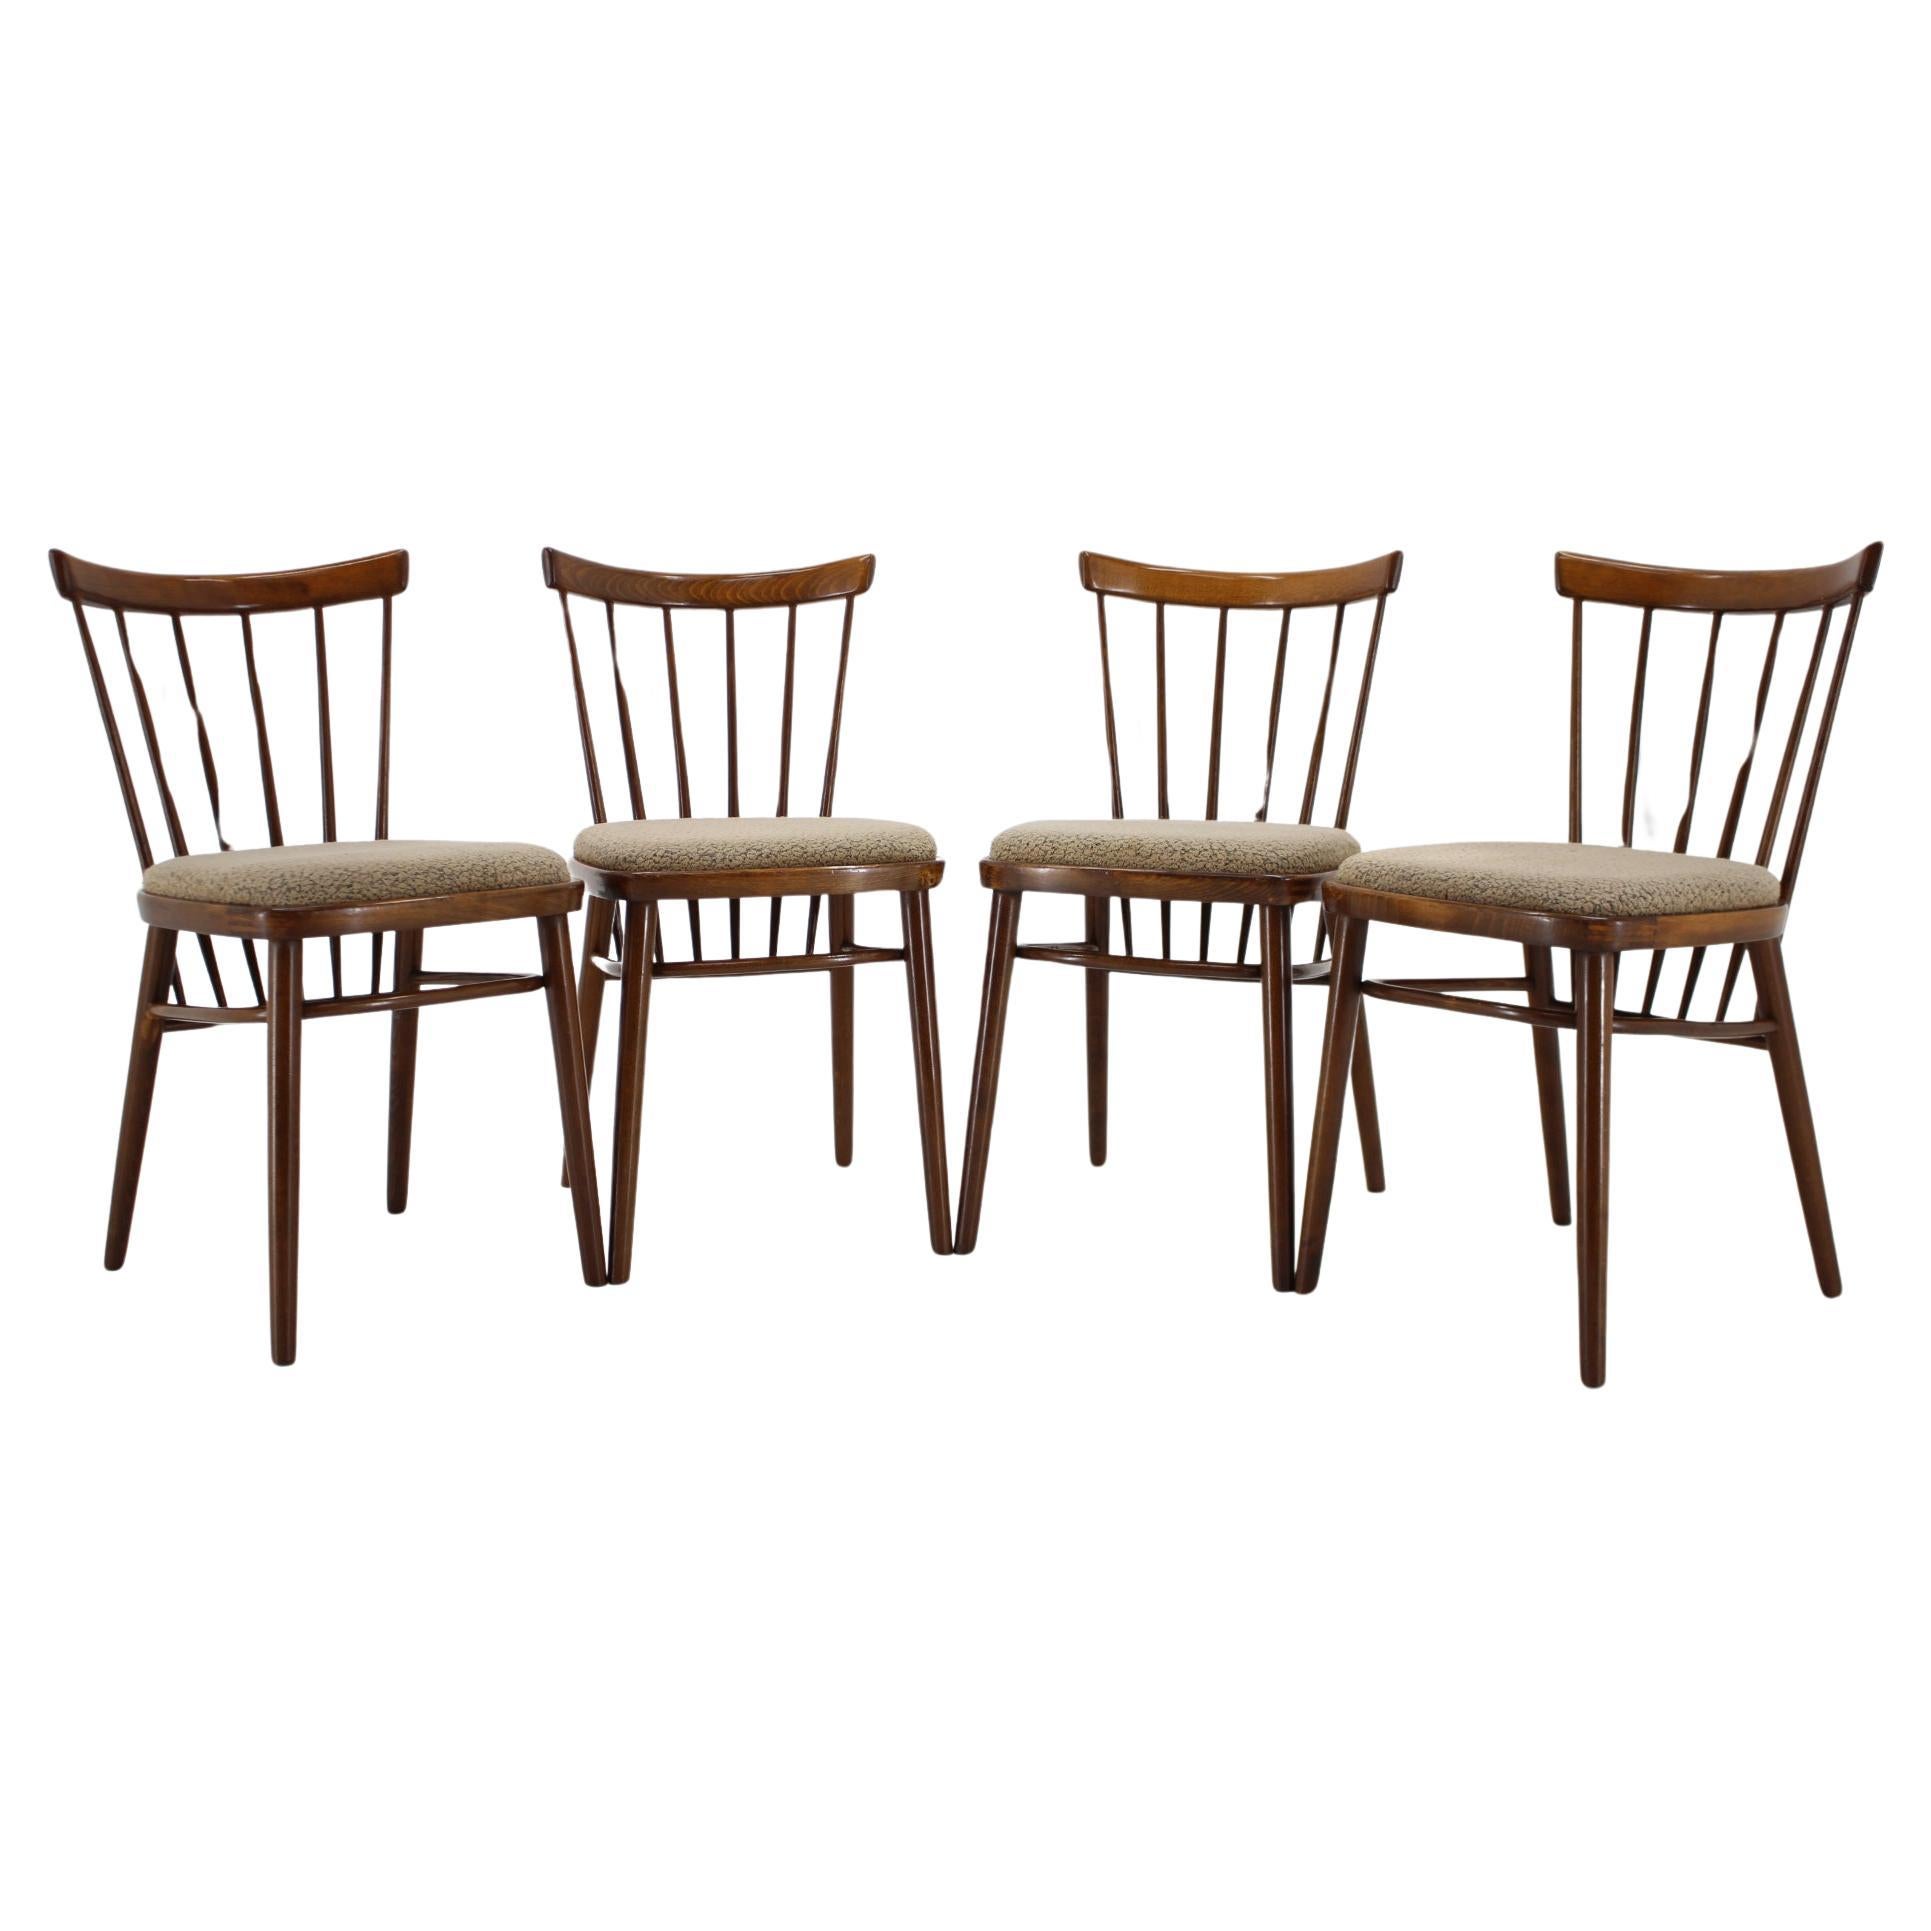 1960s Set of 4 Dining Chairs by Tatra, Czechoslovakia